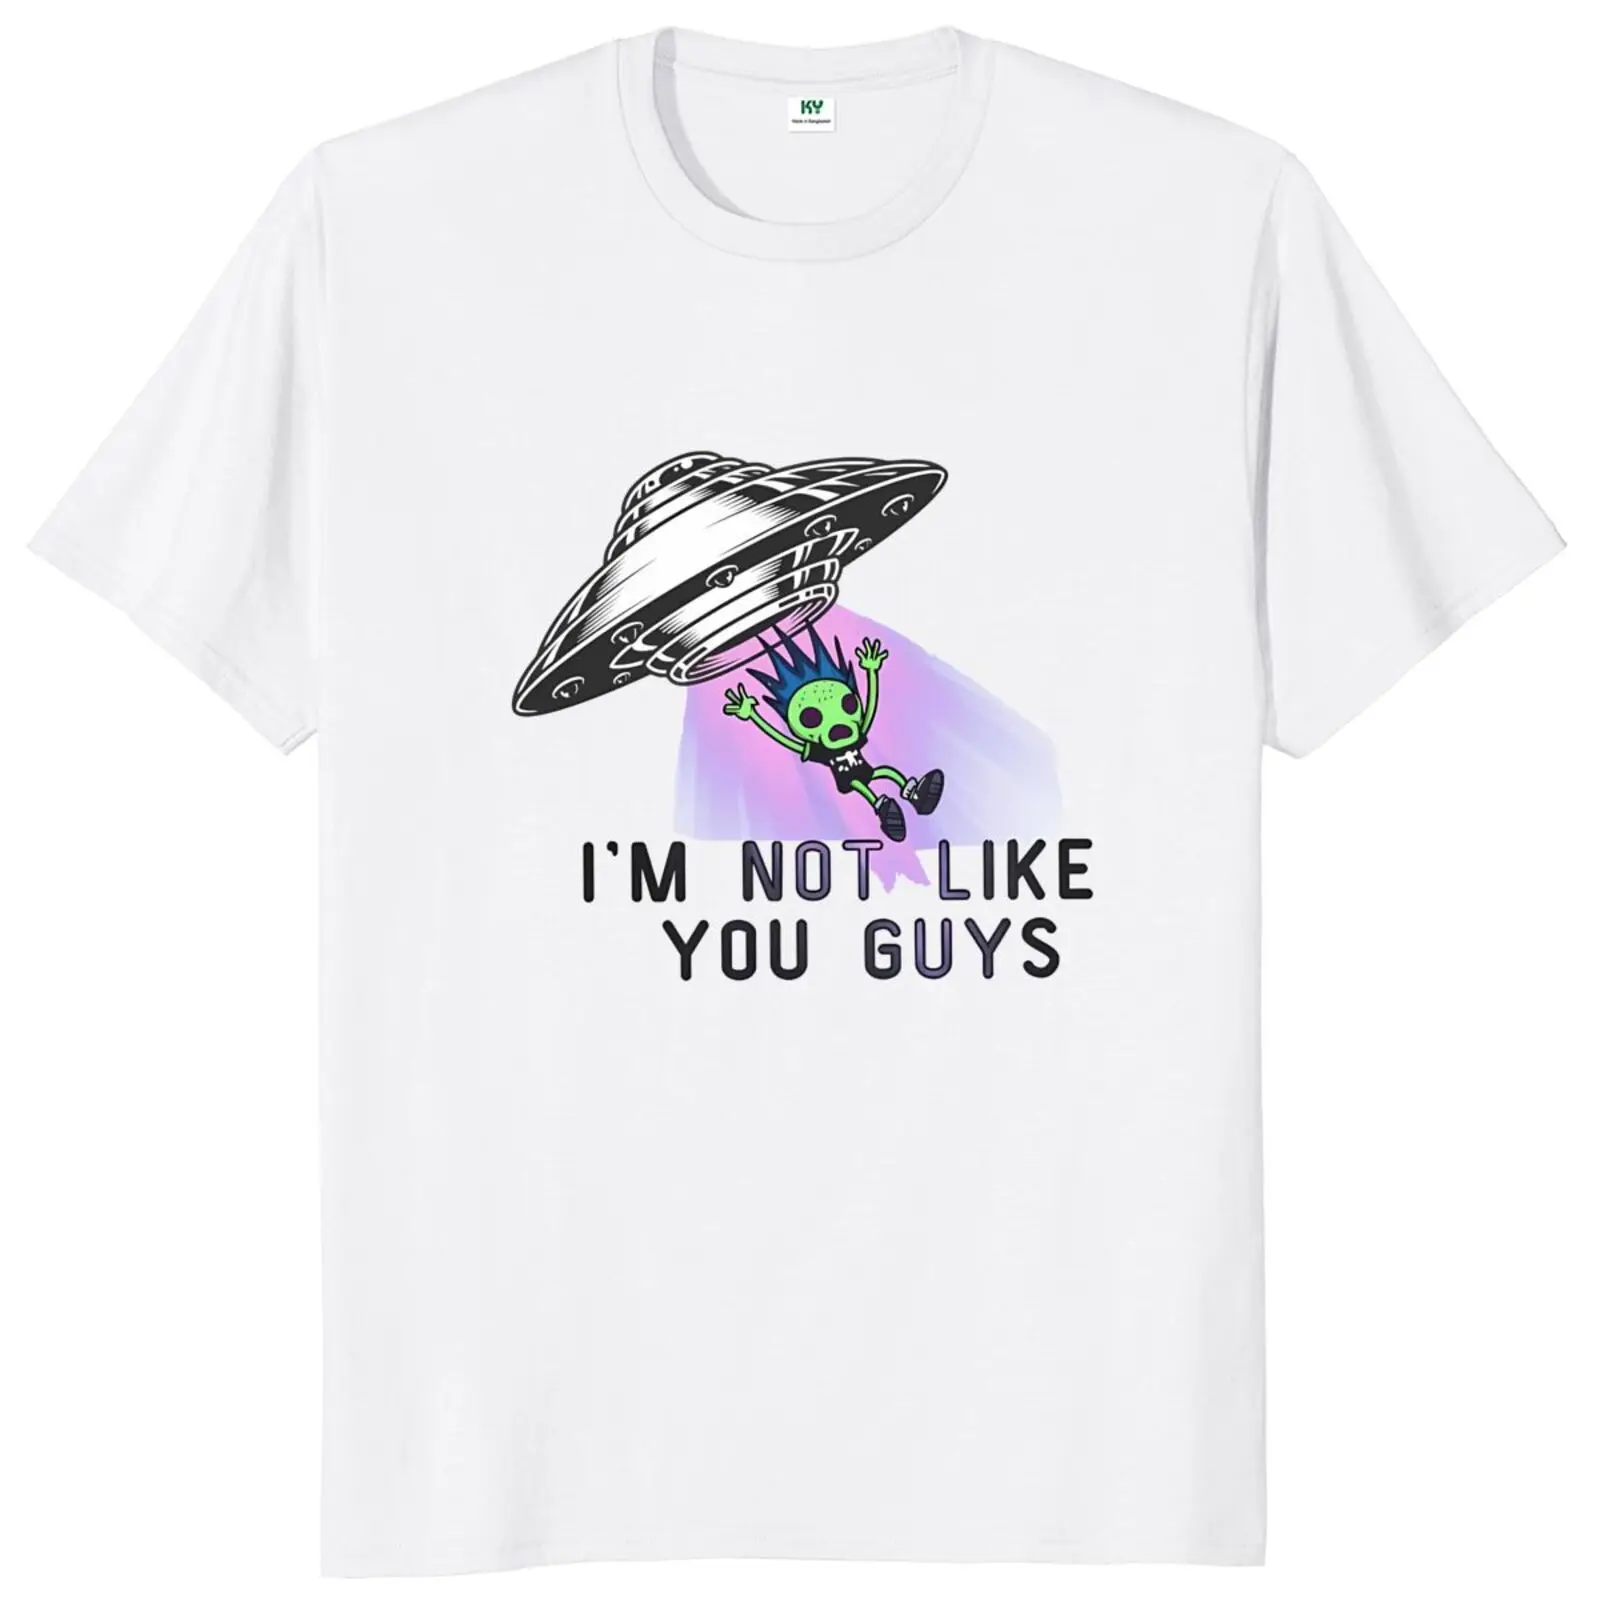 

I'm Not Like You Guys T Shirt Alien Graphic Pop Rock Music Fans Gift Short Sleeve Casual 100% Cototn Unisex EU Size Soft T-shirt